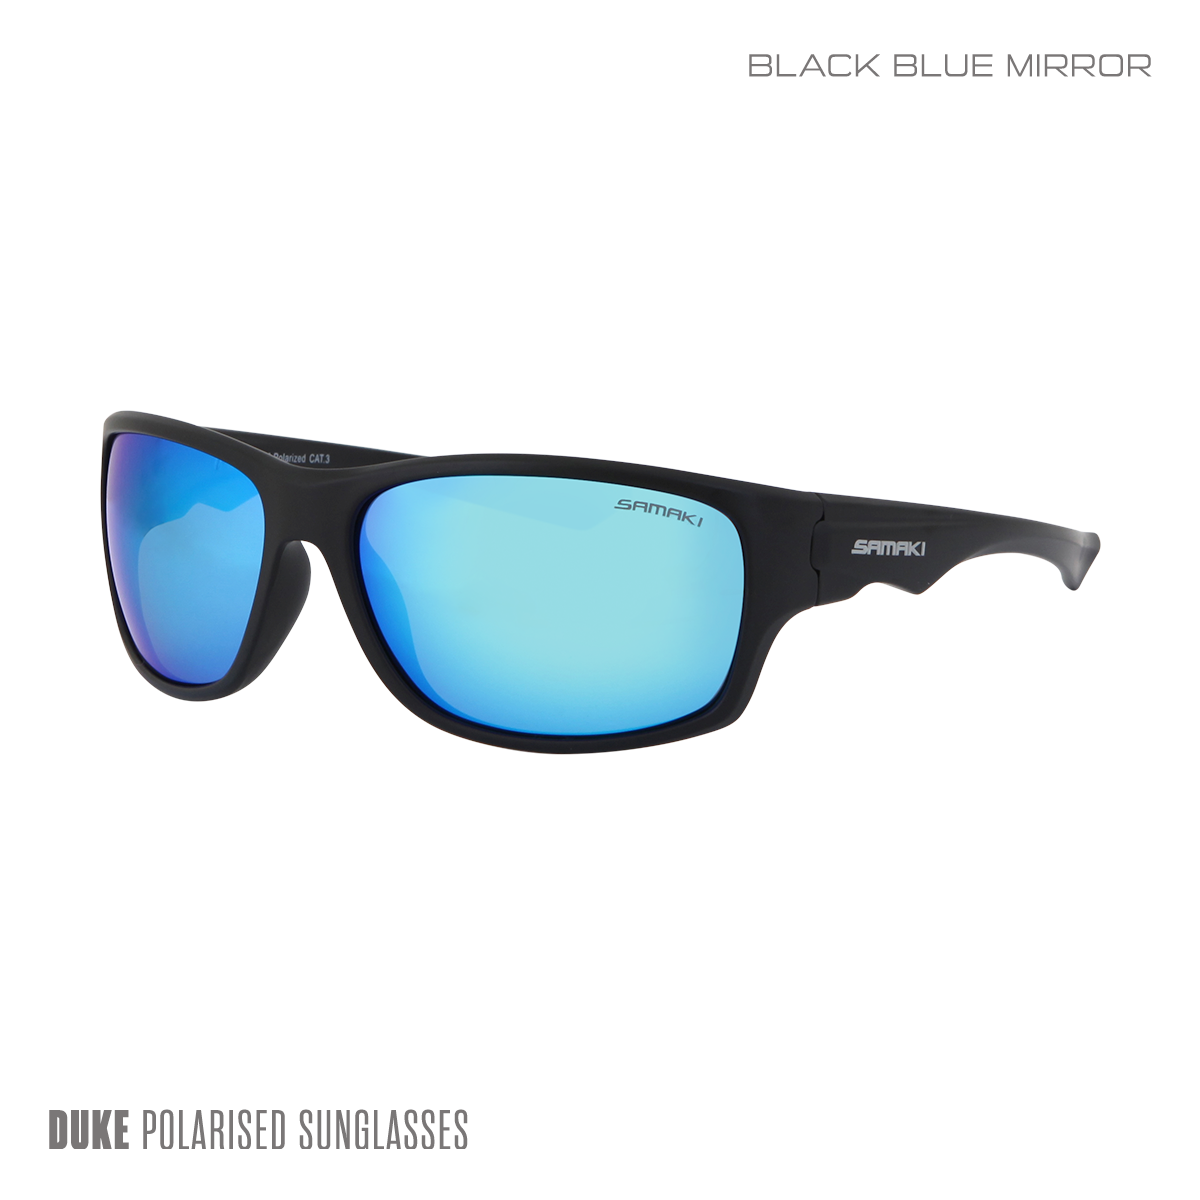 Duke Polarised Sunglasses